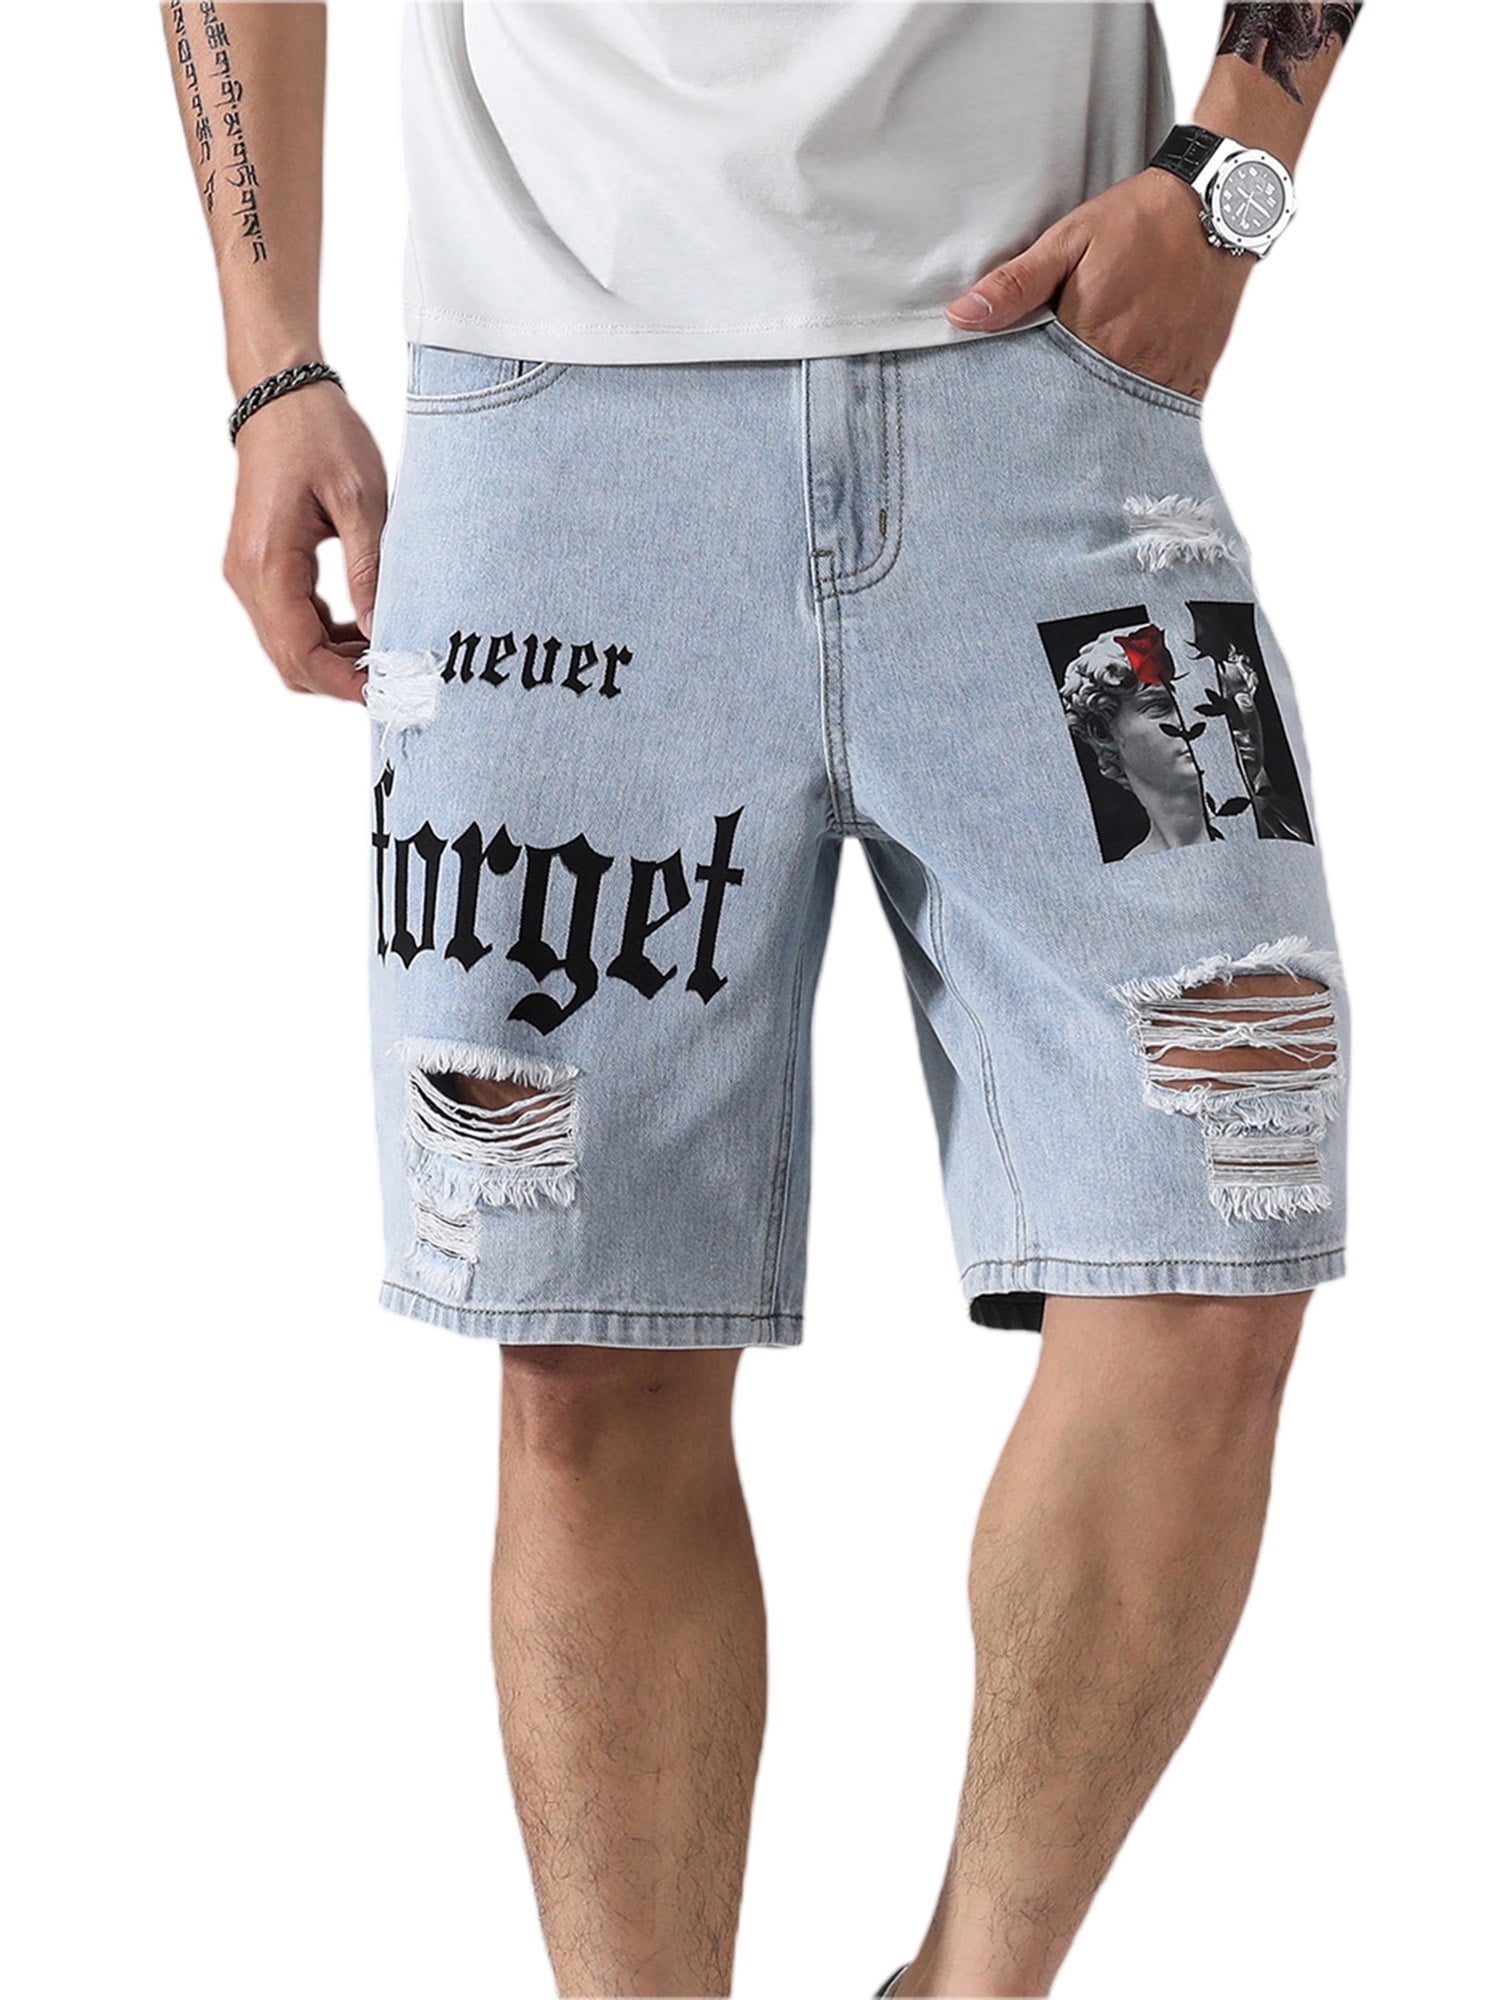 OKilr Pjik Men's Summer Casual Mid Rise Regular Distressed Denim Shorts Retro Ripped Stretchy Jeans Shorts 